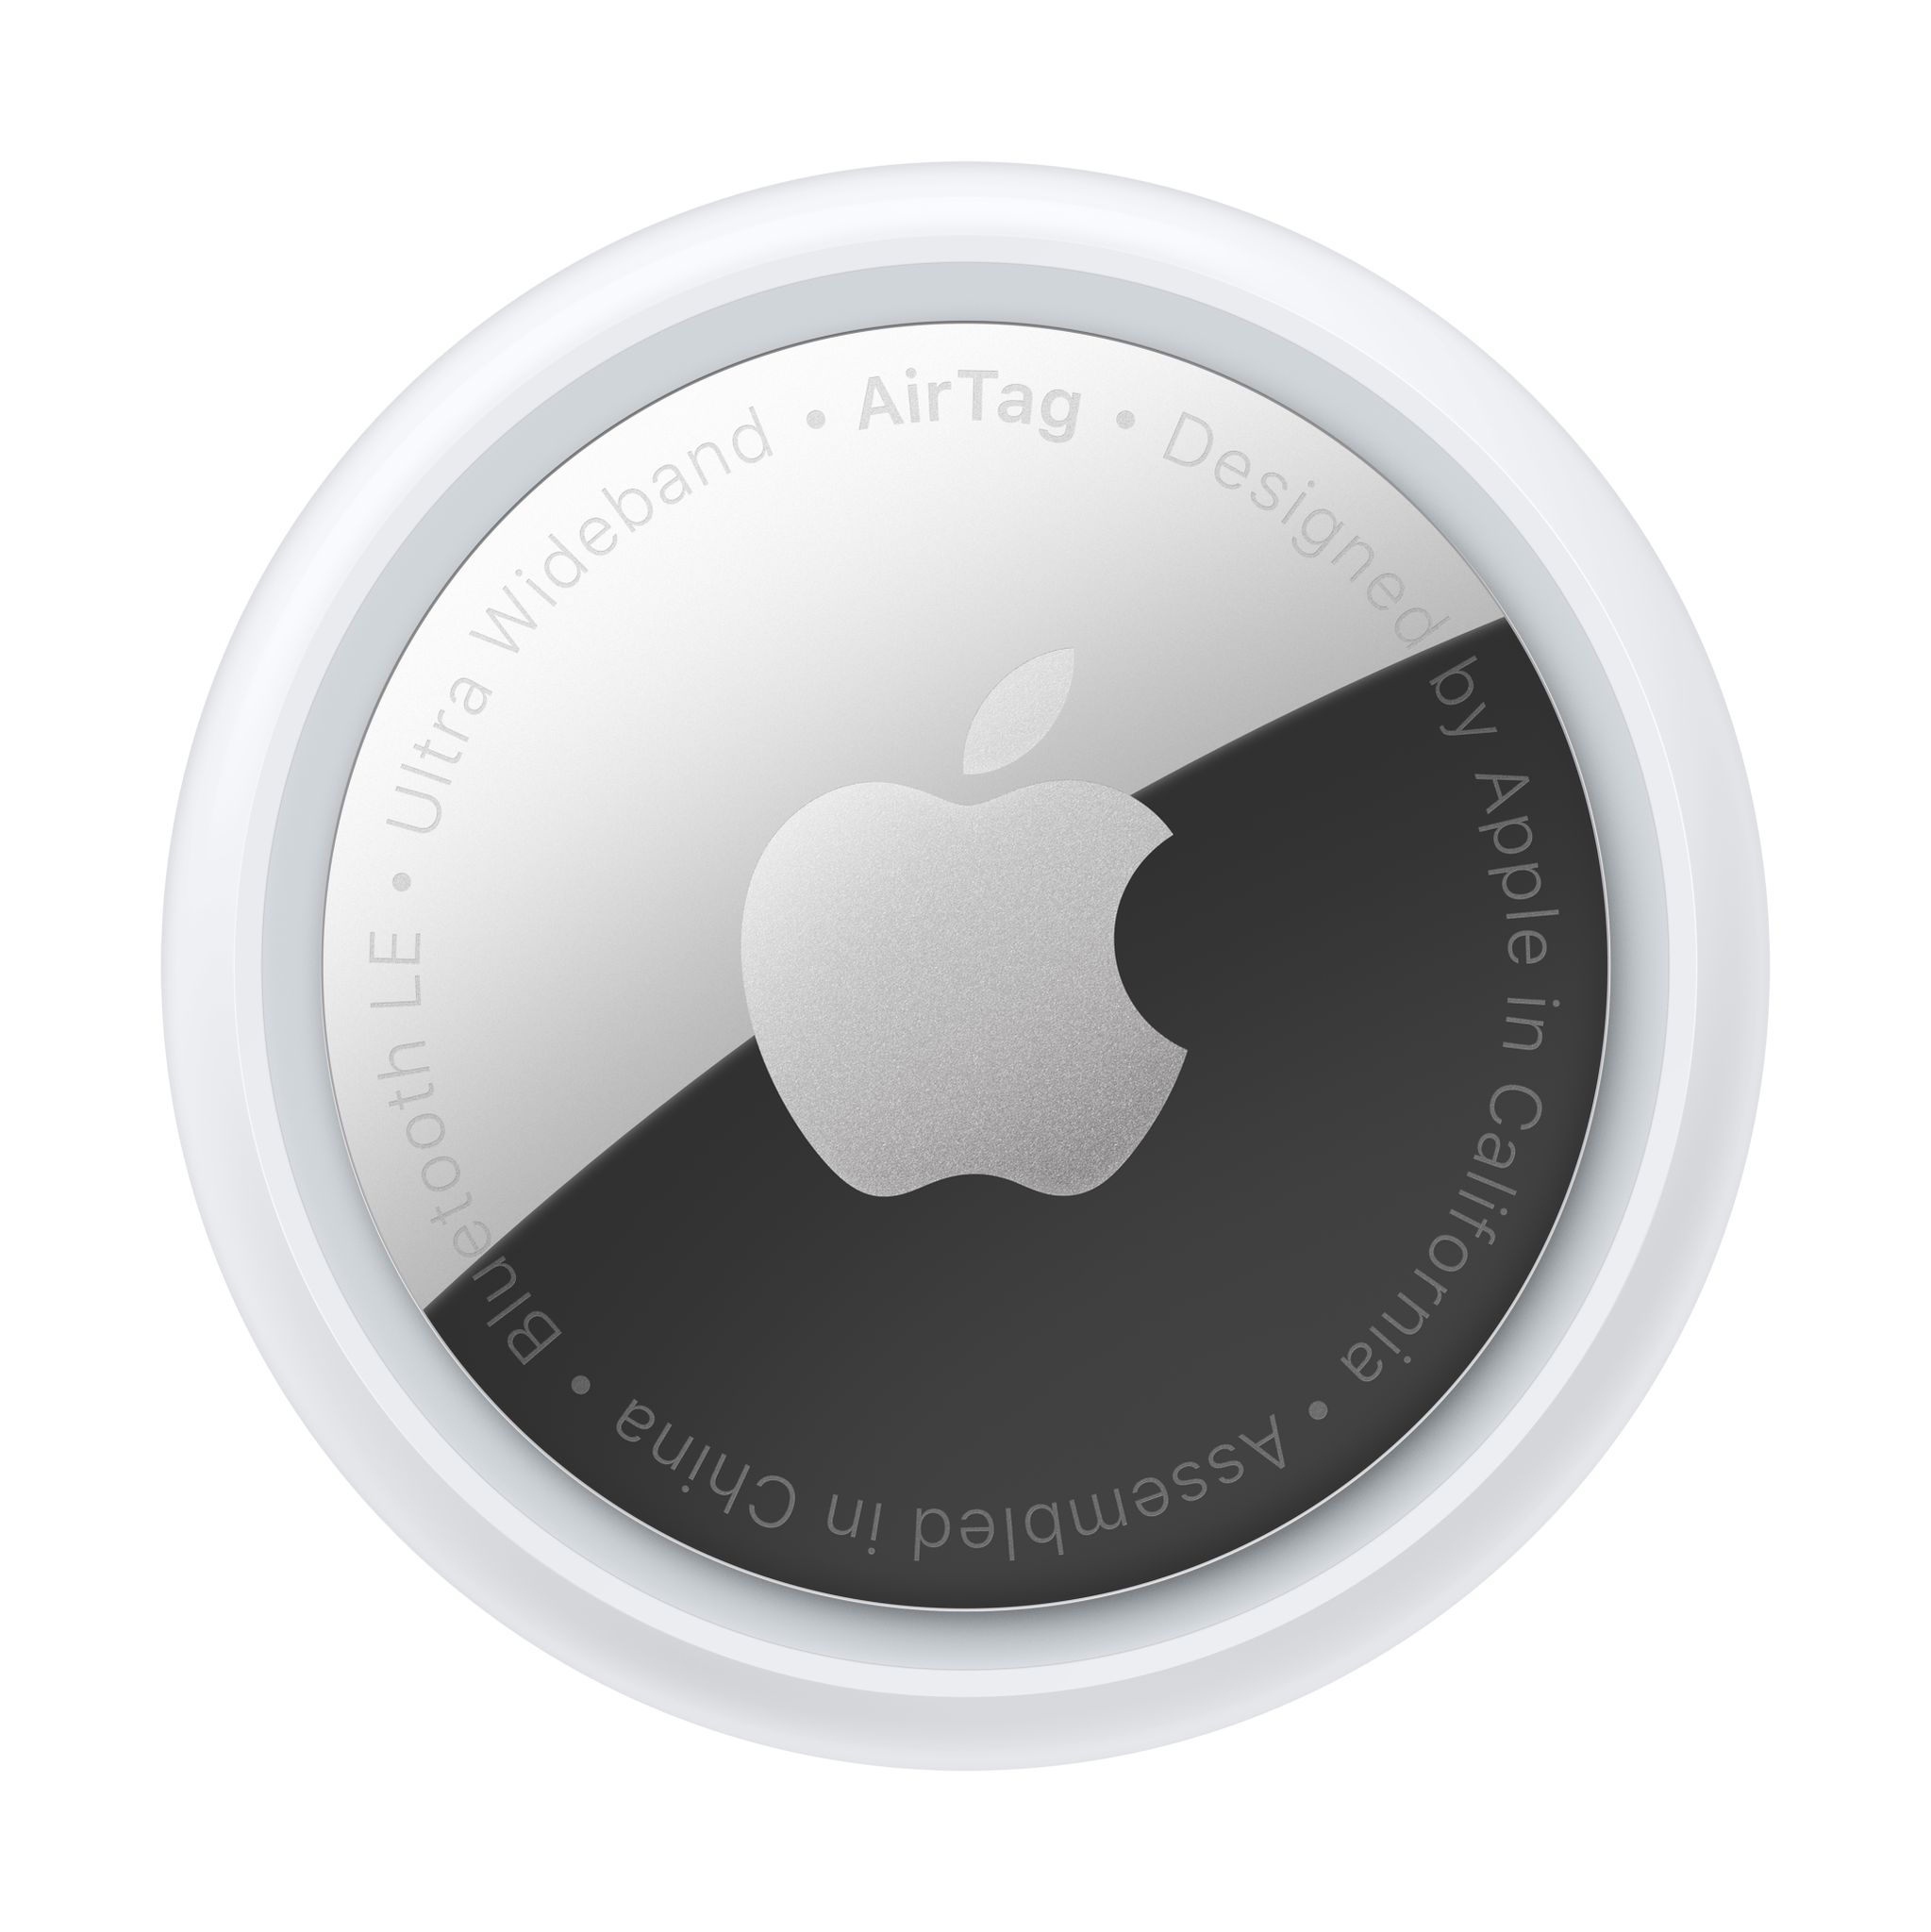 Apple AirTag | Amazon (US)